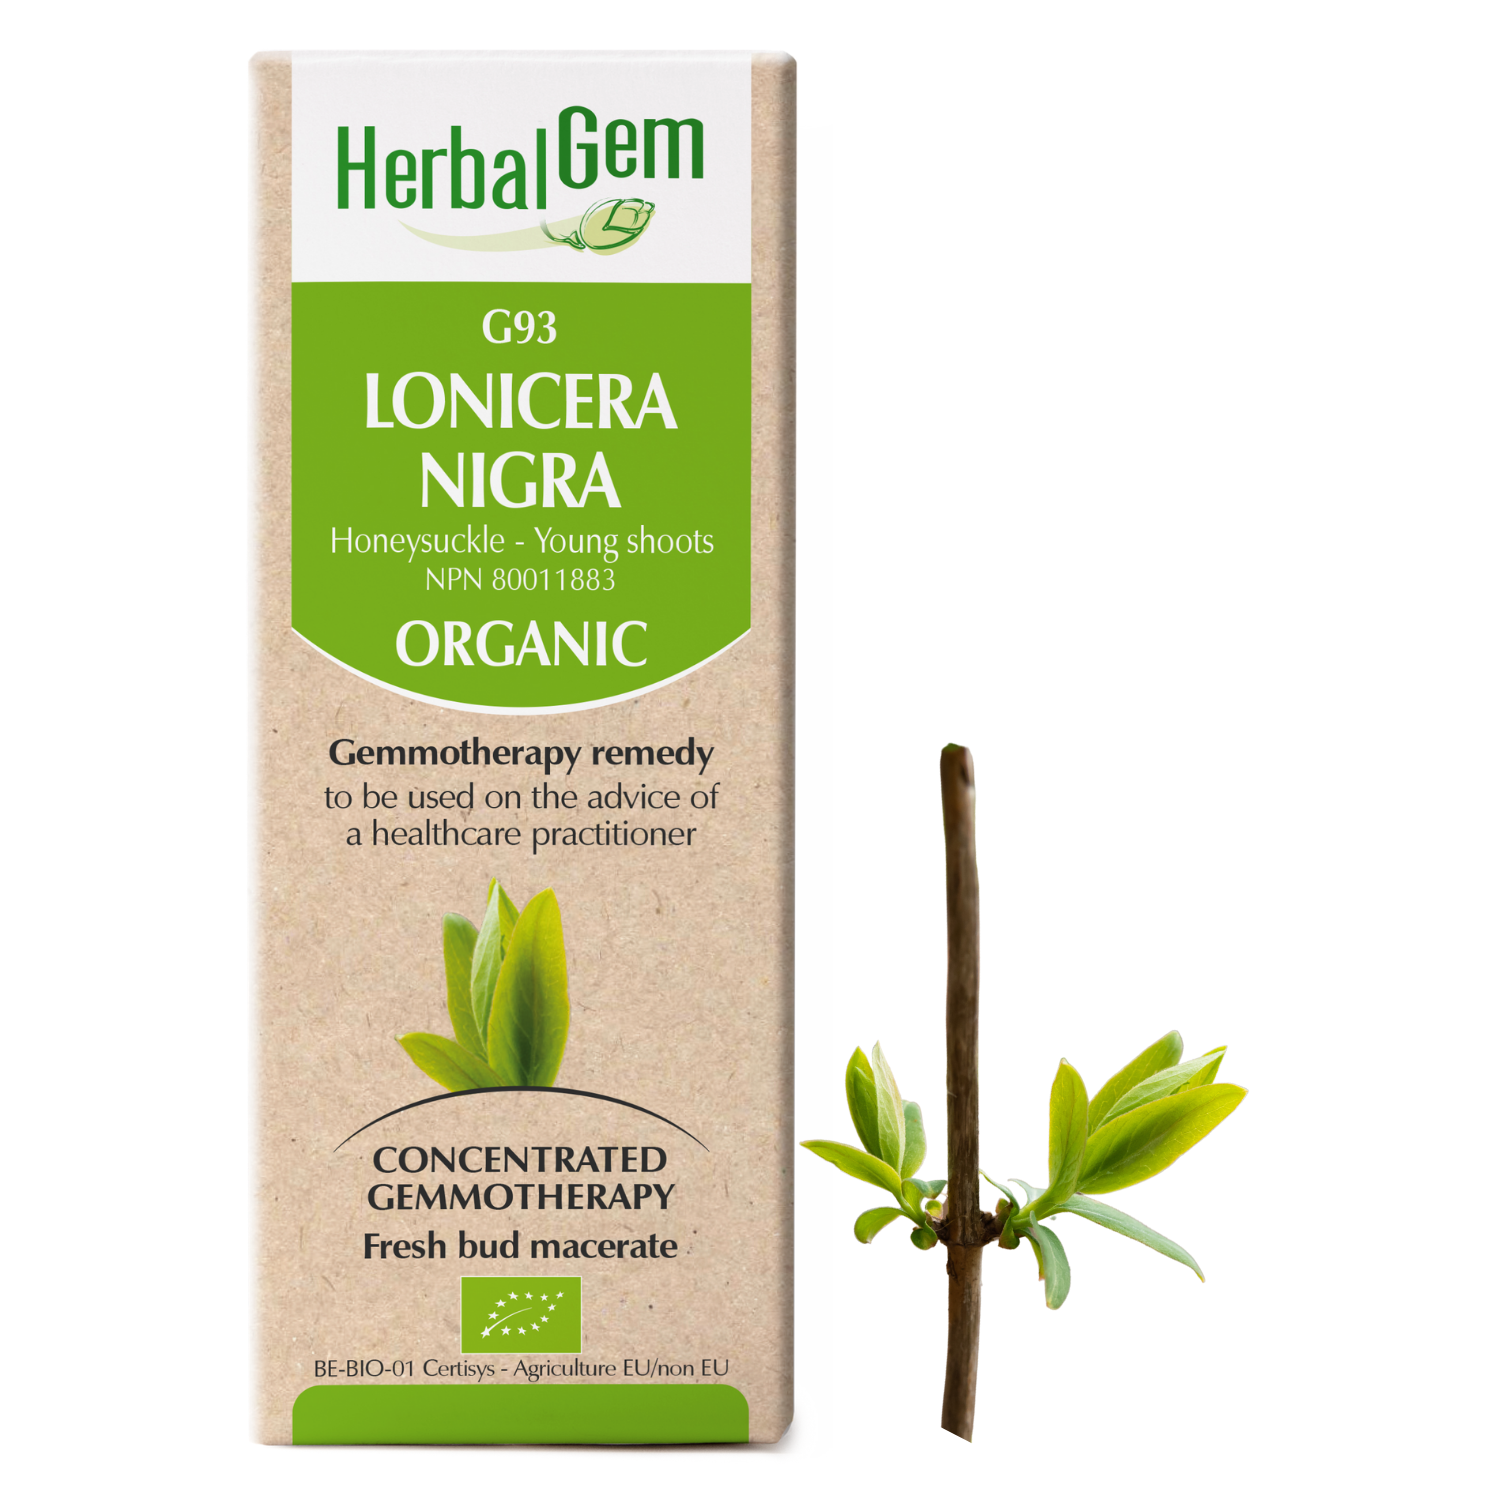 G93 Lonicera nigra Gemmotherapy remedy Organic  Honeysuckle Young shoots 50 ml